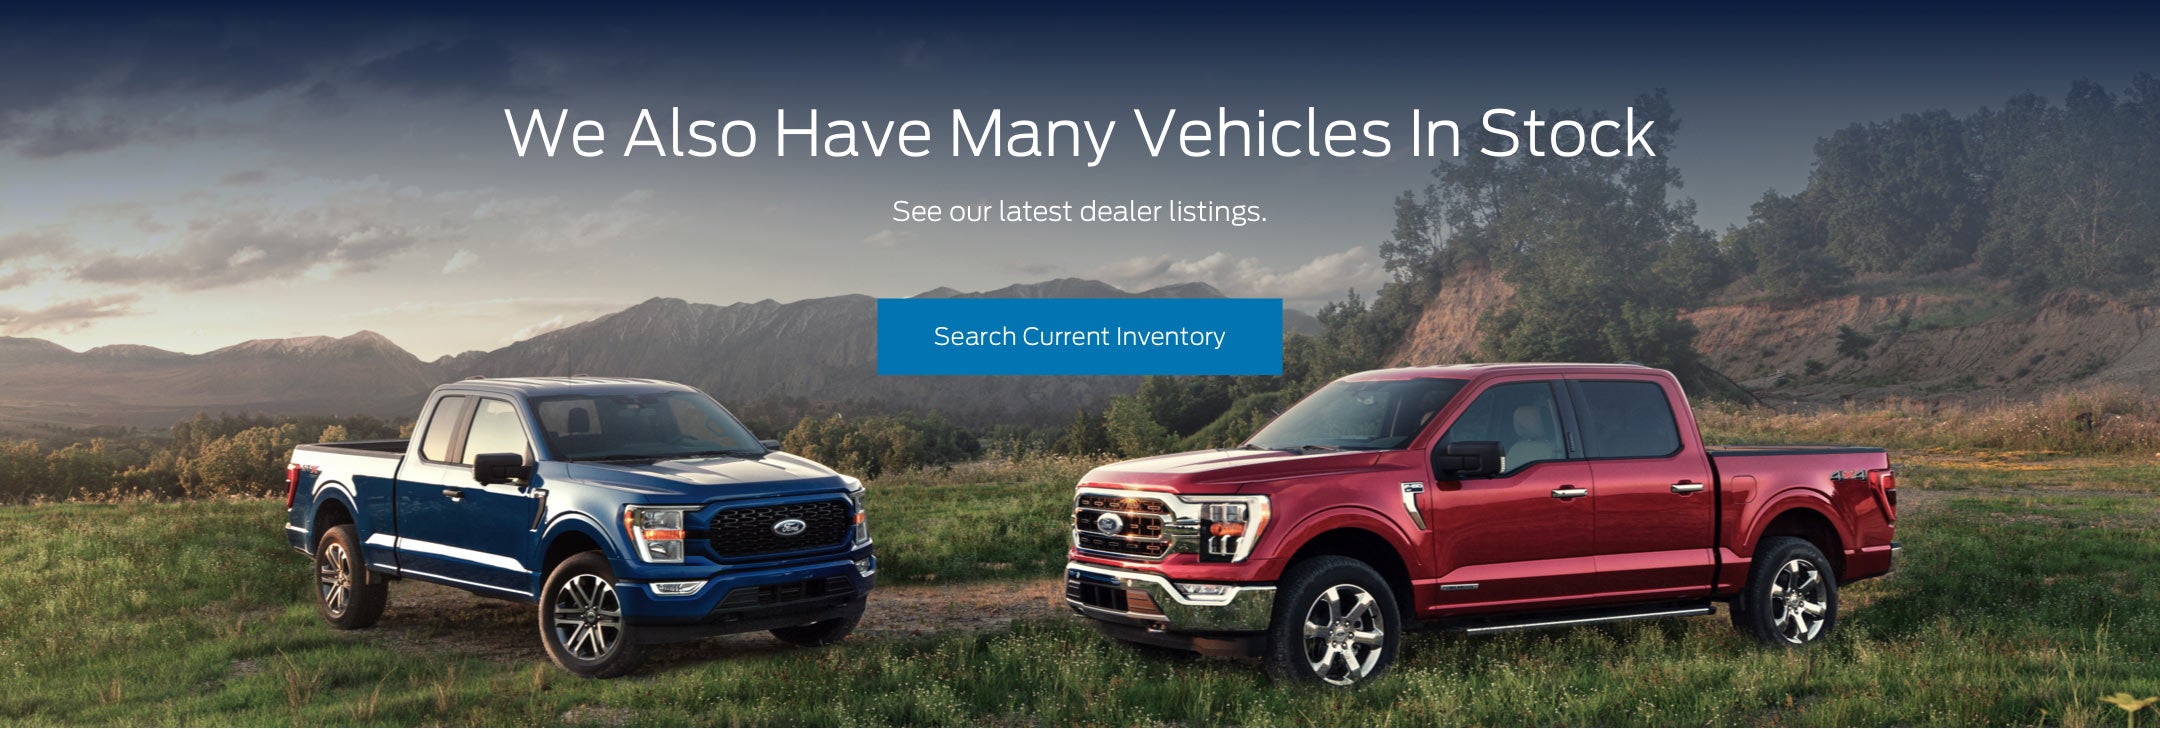 Ford vehicles in stock | Duncan Ford Lincoln in Blacksburg VA